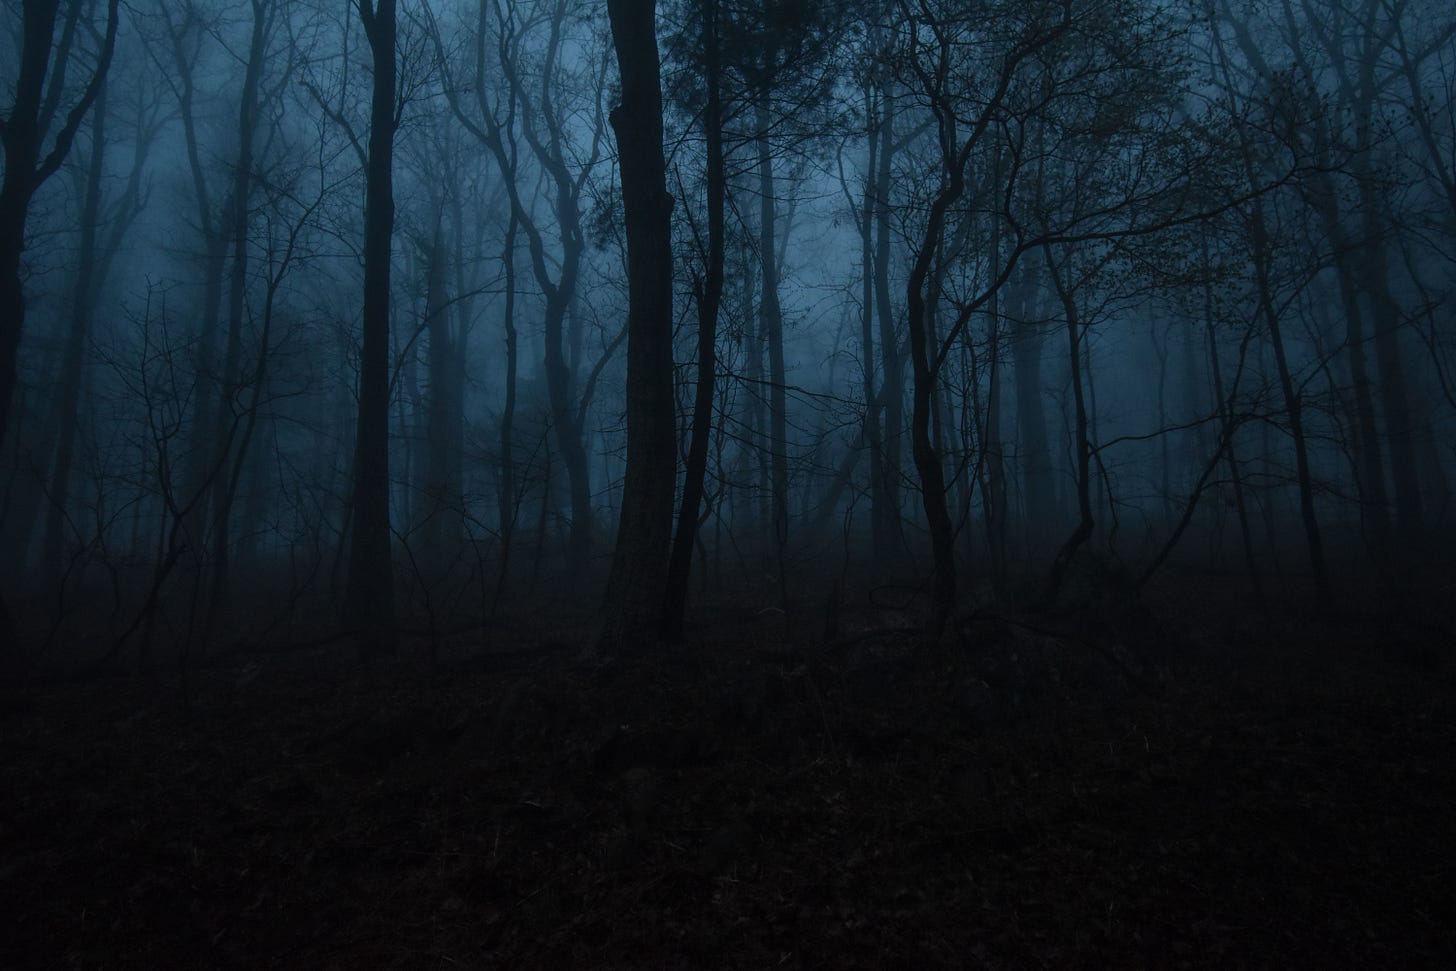 Image description: a dark forest that seems shrouded in mist.